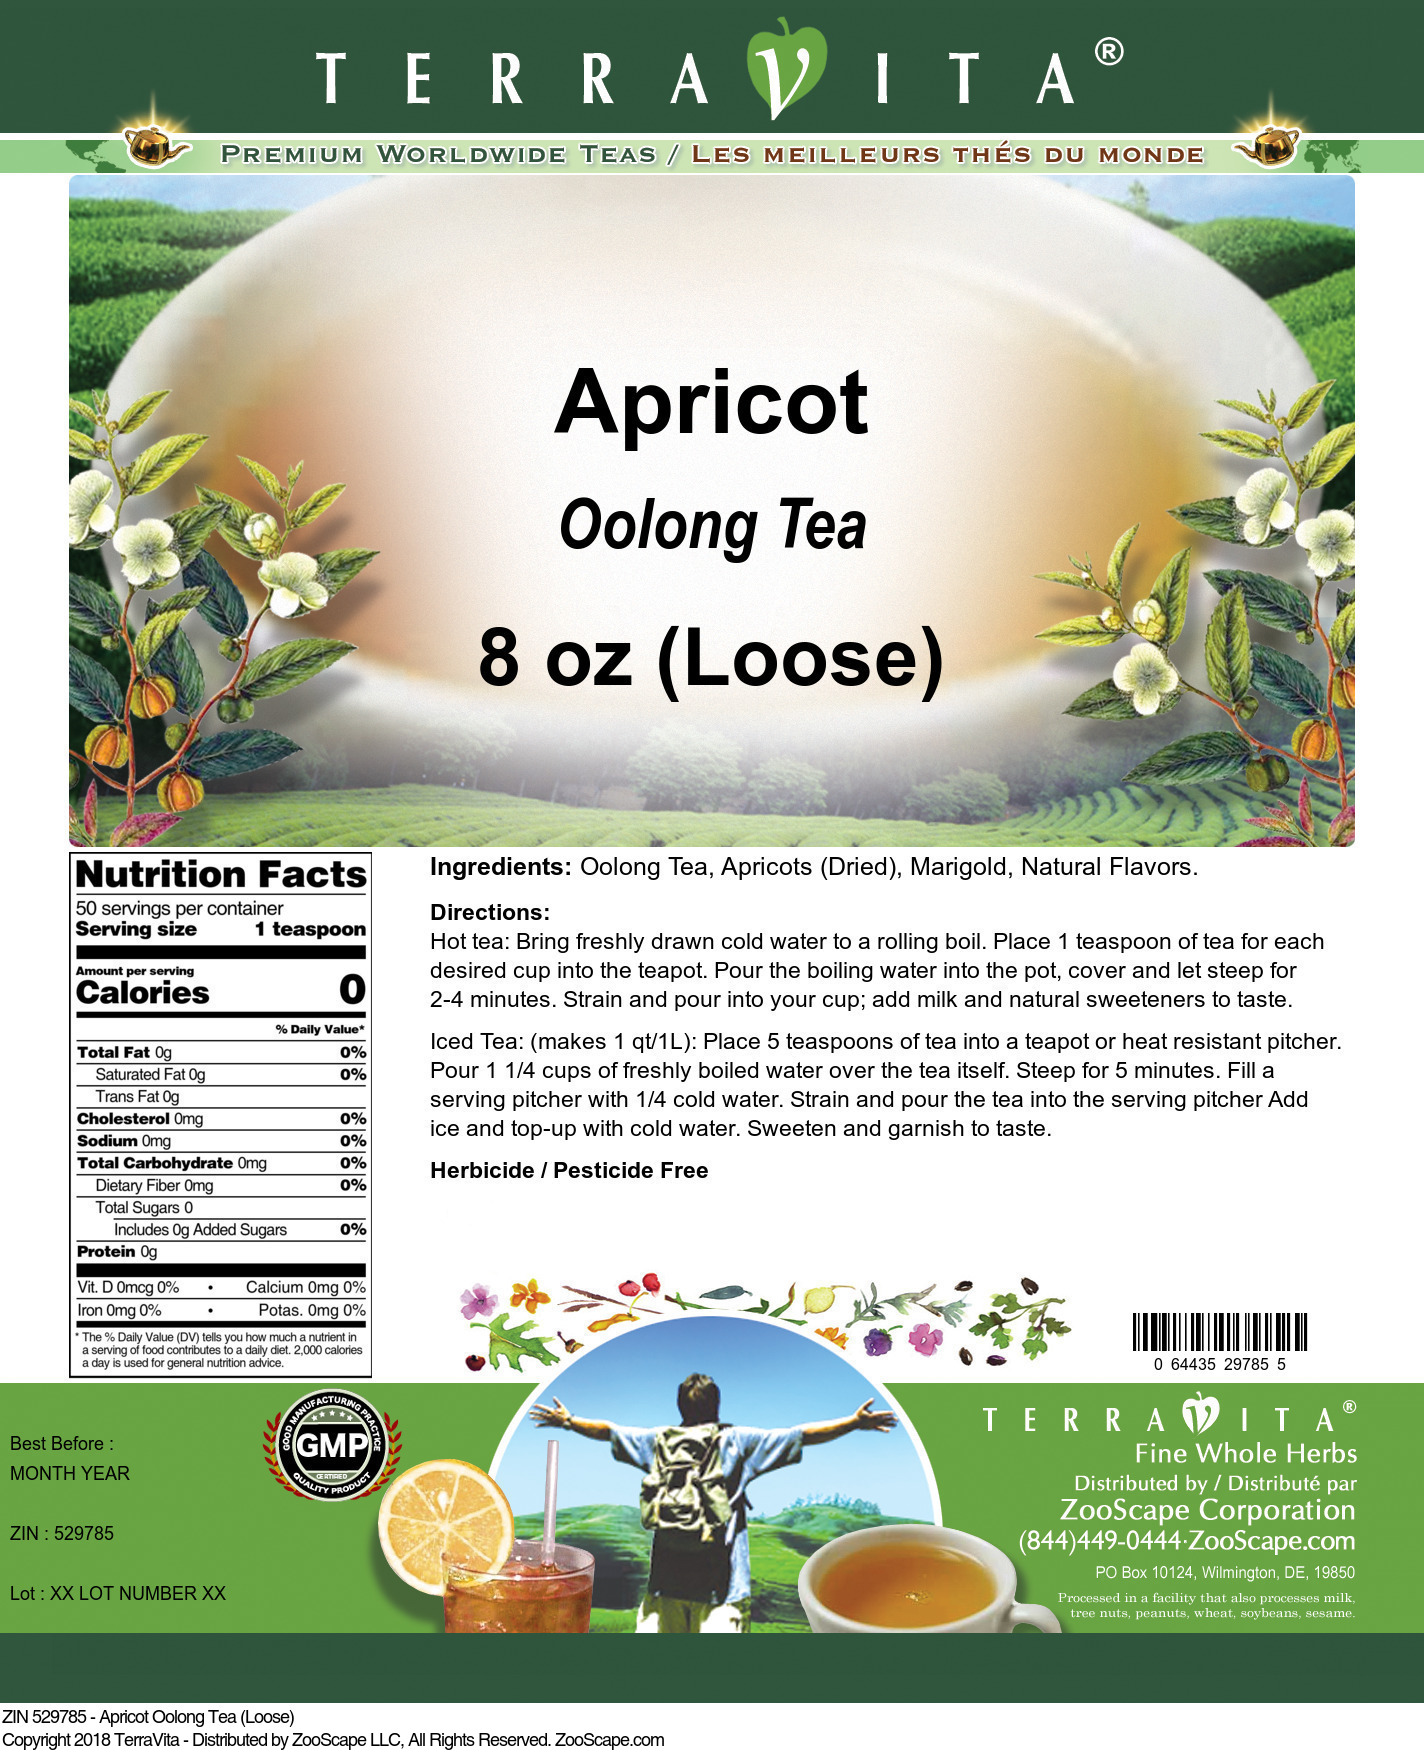 Apricot Oolong Tea (Loose) - Label